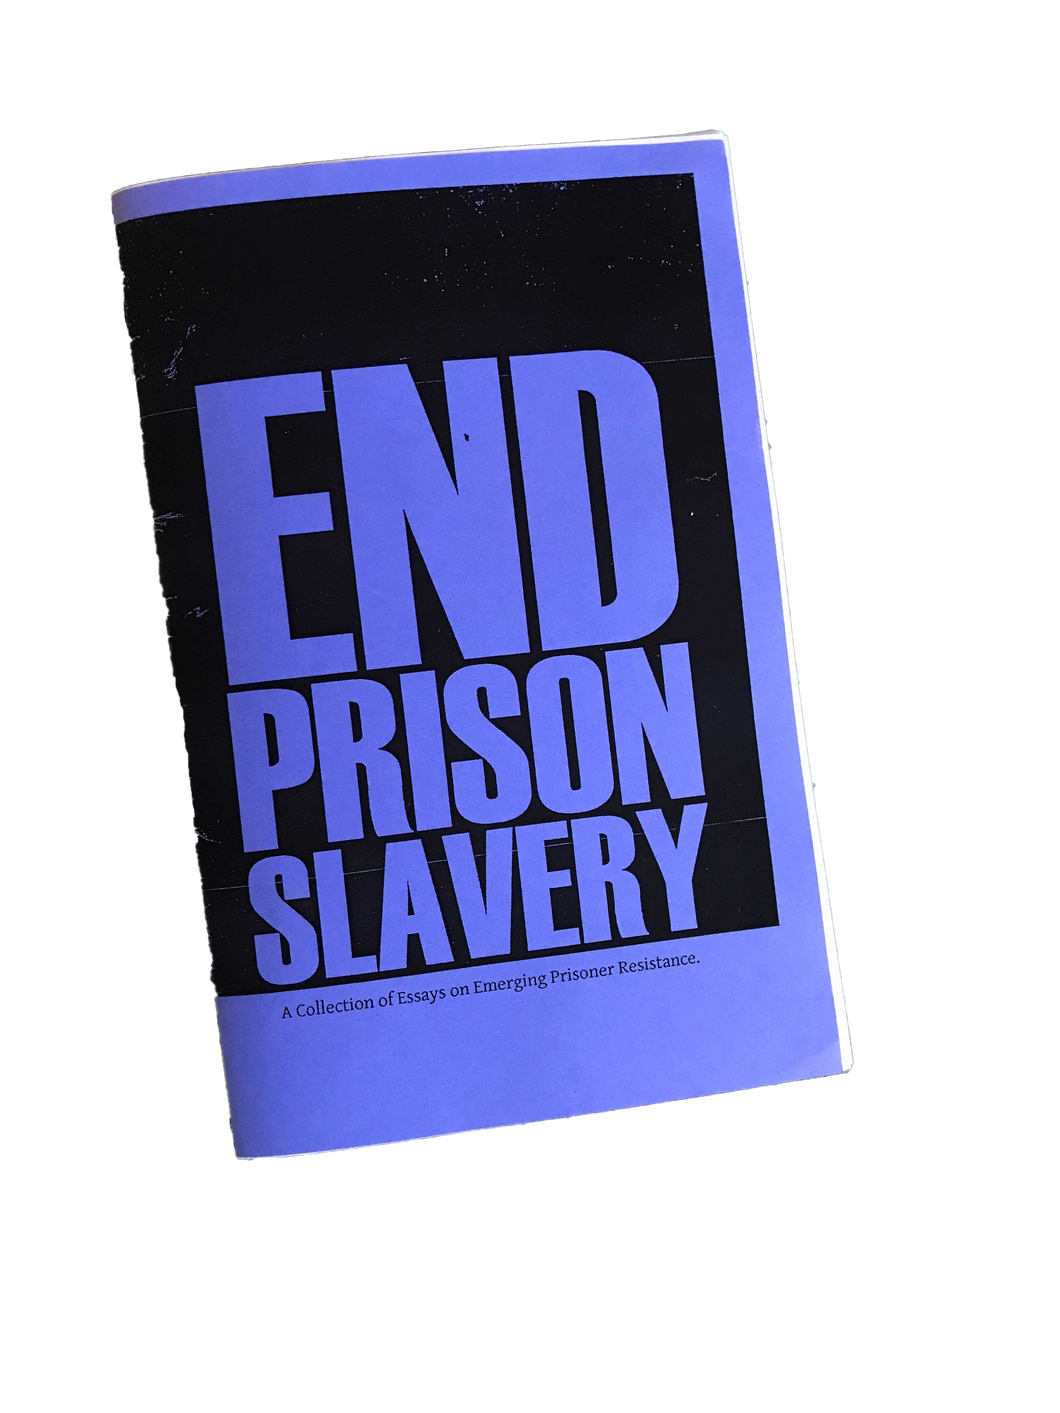 End Prison Slavery: A Collection of Essays on Emerging Prisoner Resistance